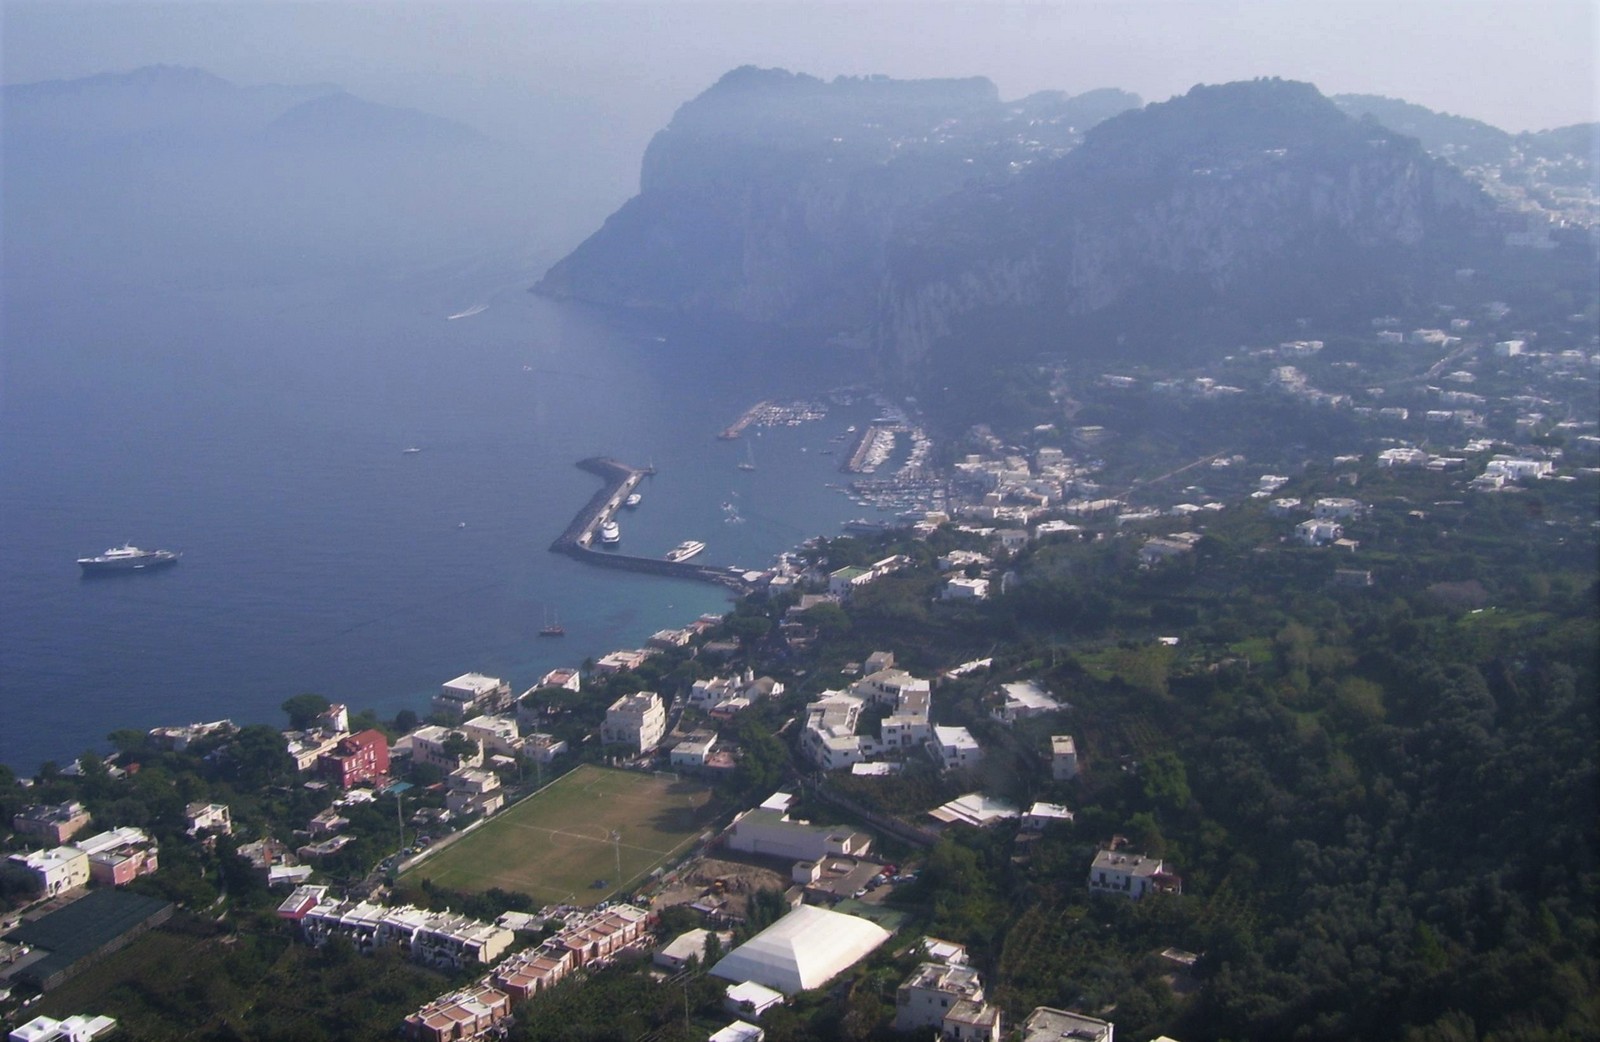 Capri - Marina Grande